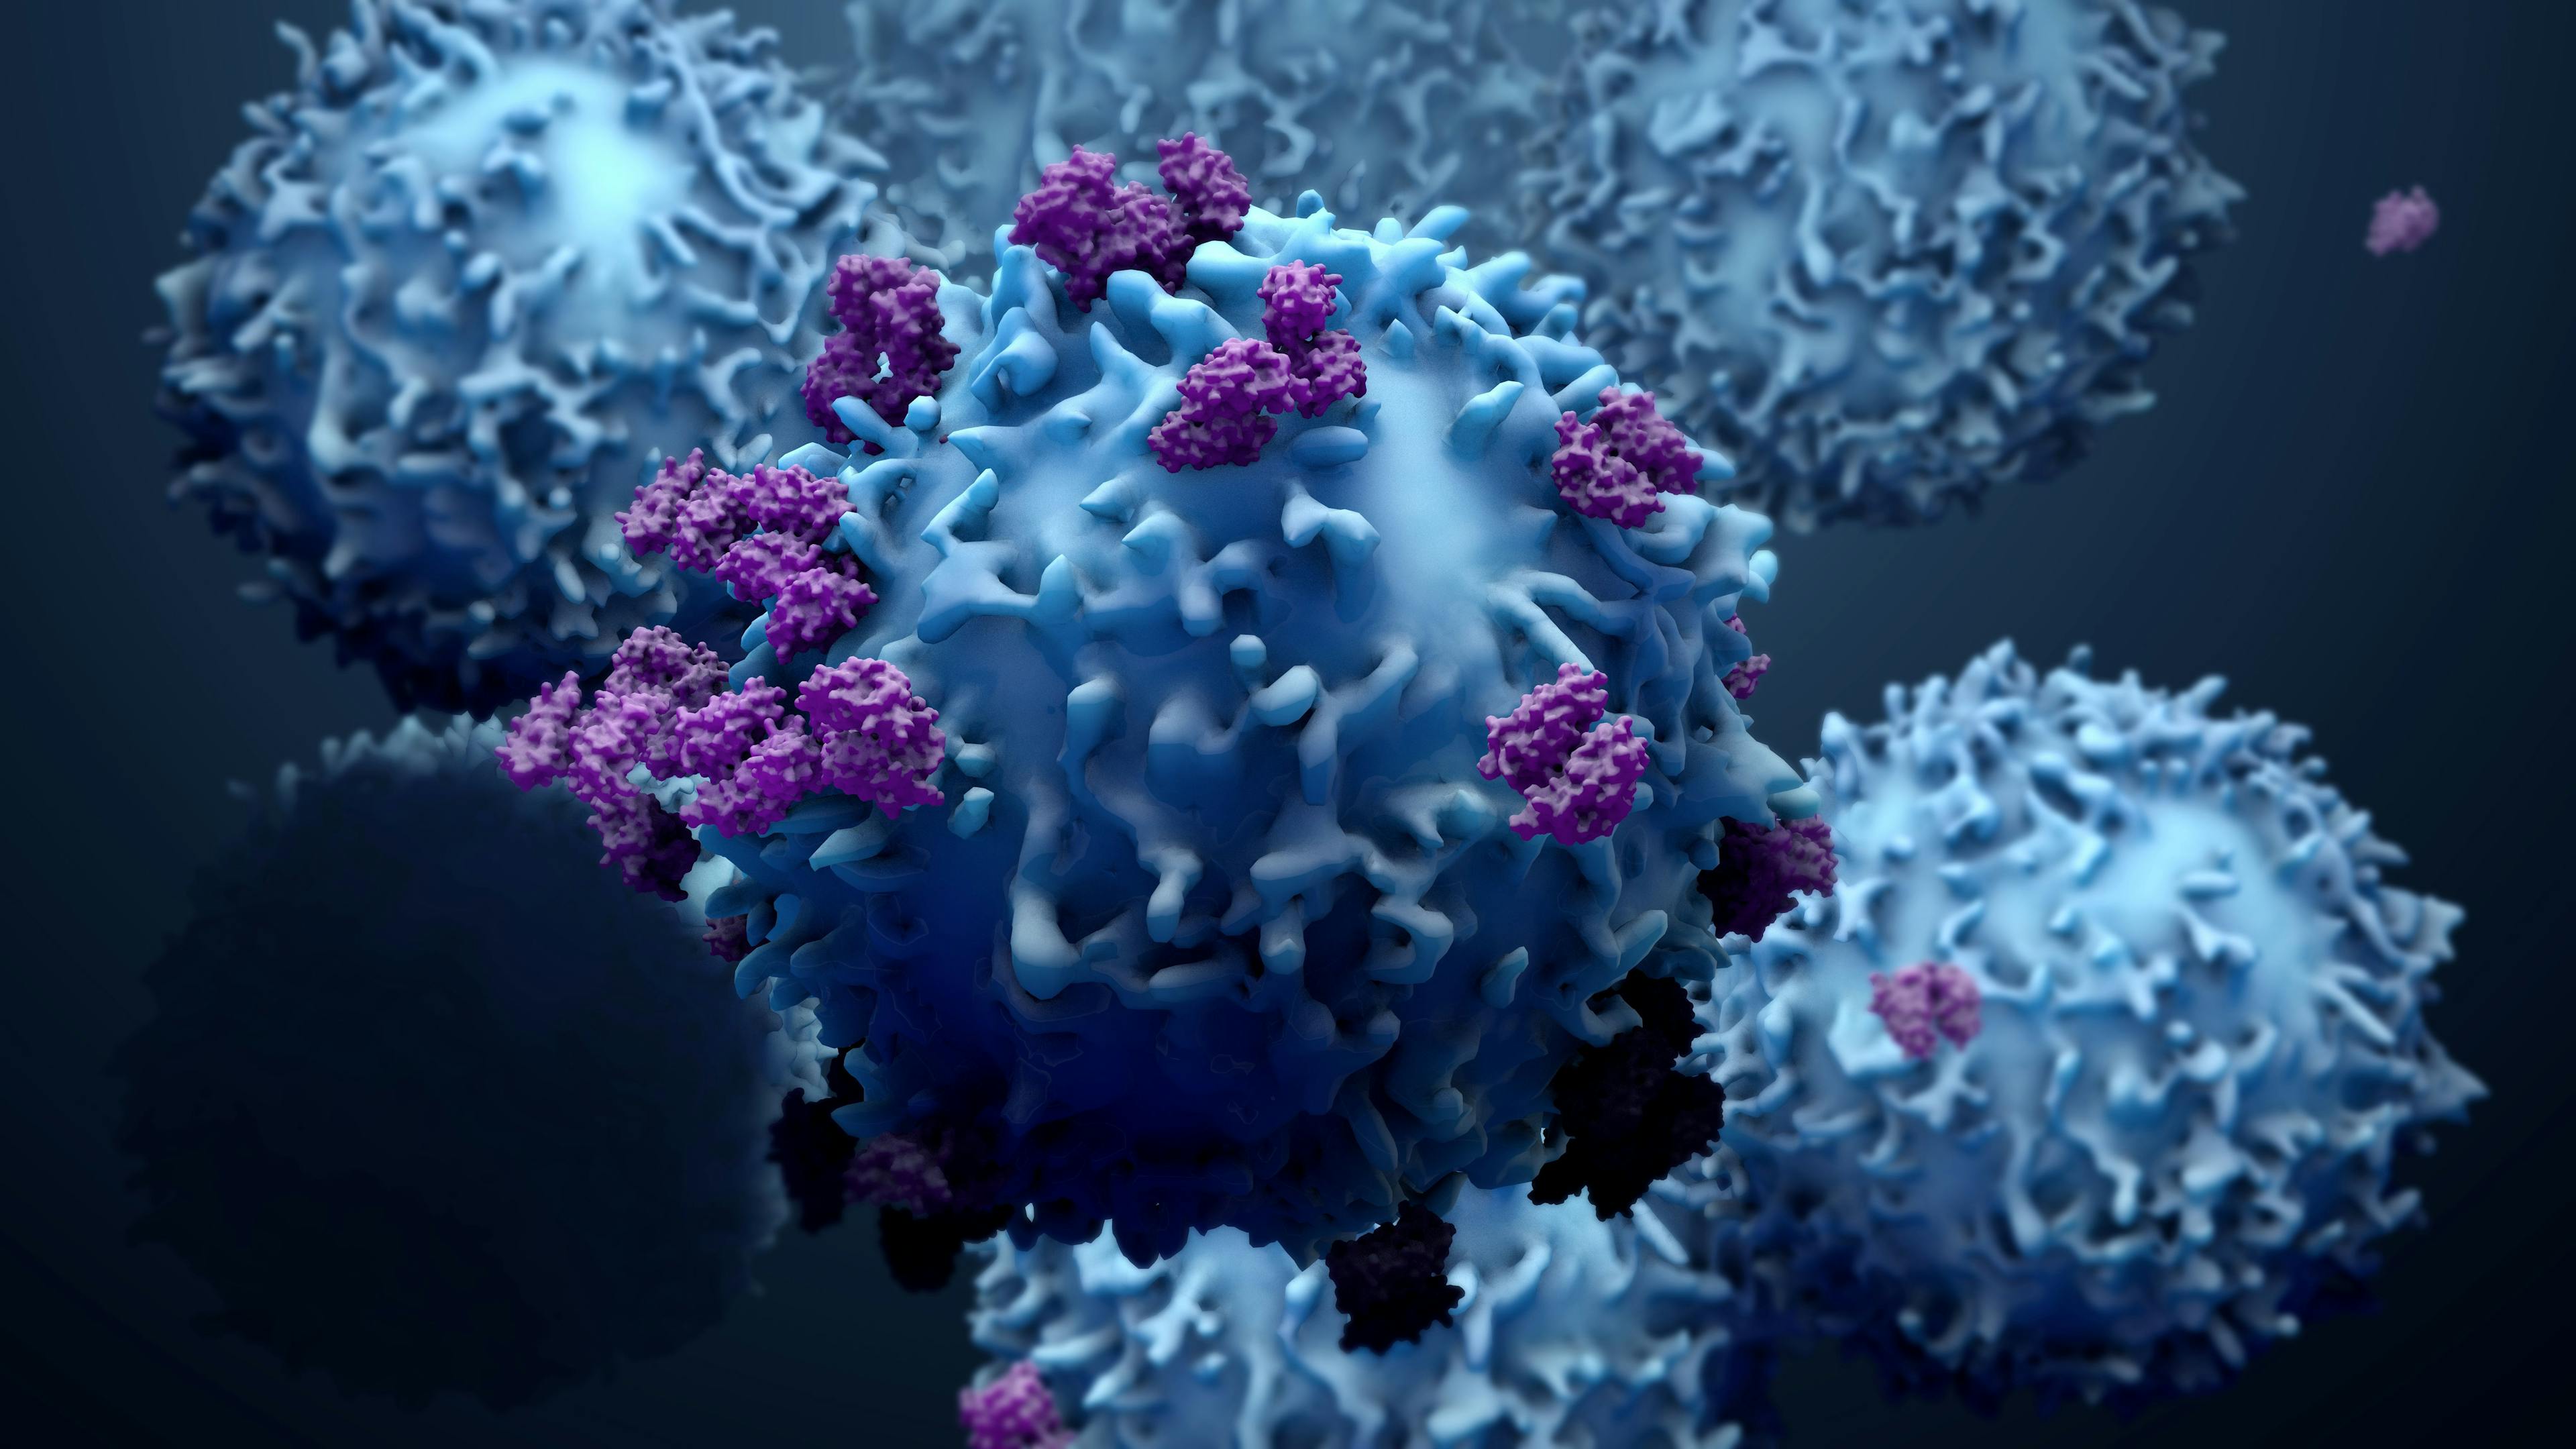 3d illustration proteins with lymphocytes, t cells or cancer cells | Image Credit: Design Cells - stock.adobe.com